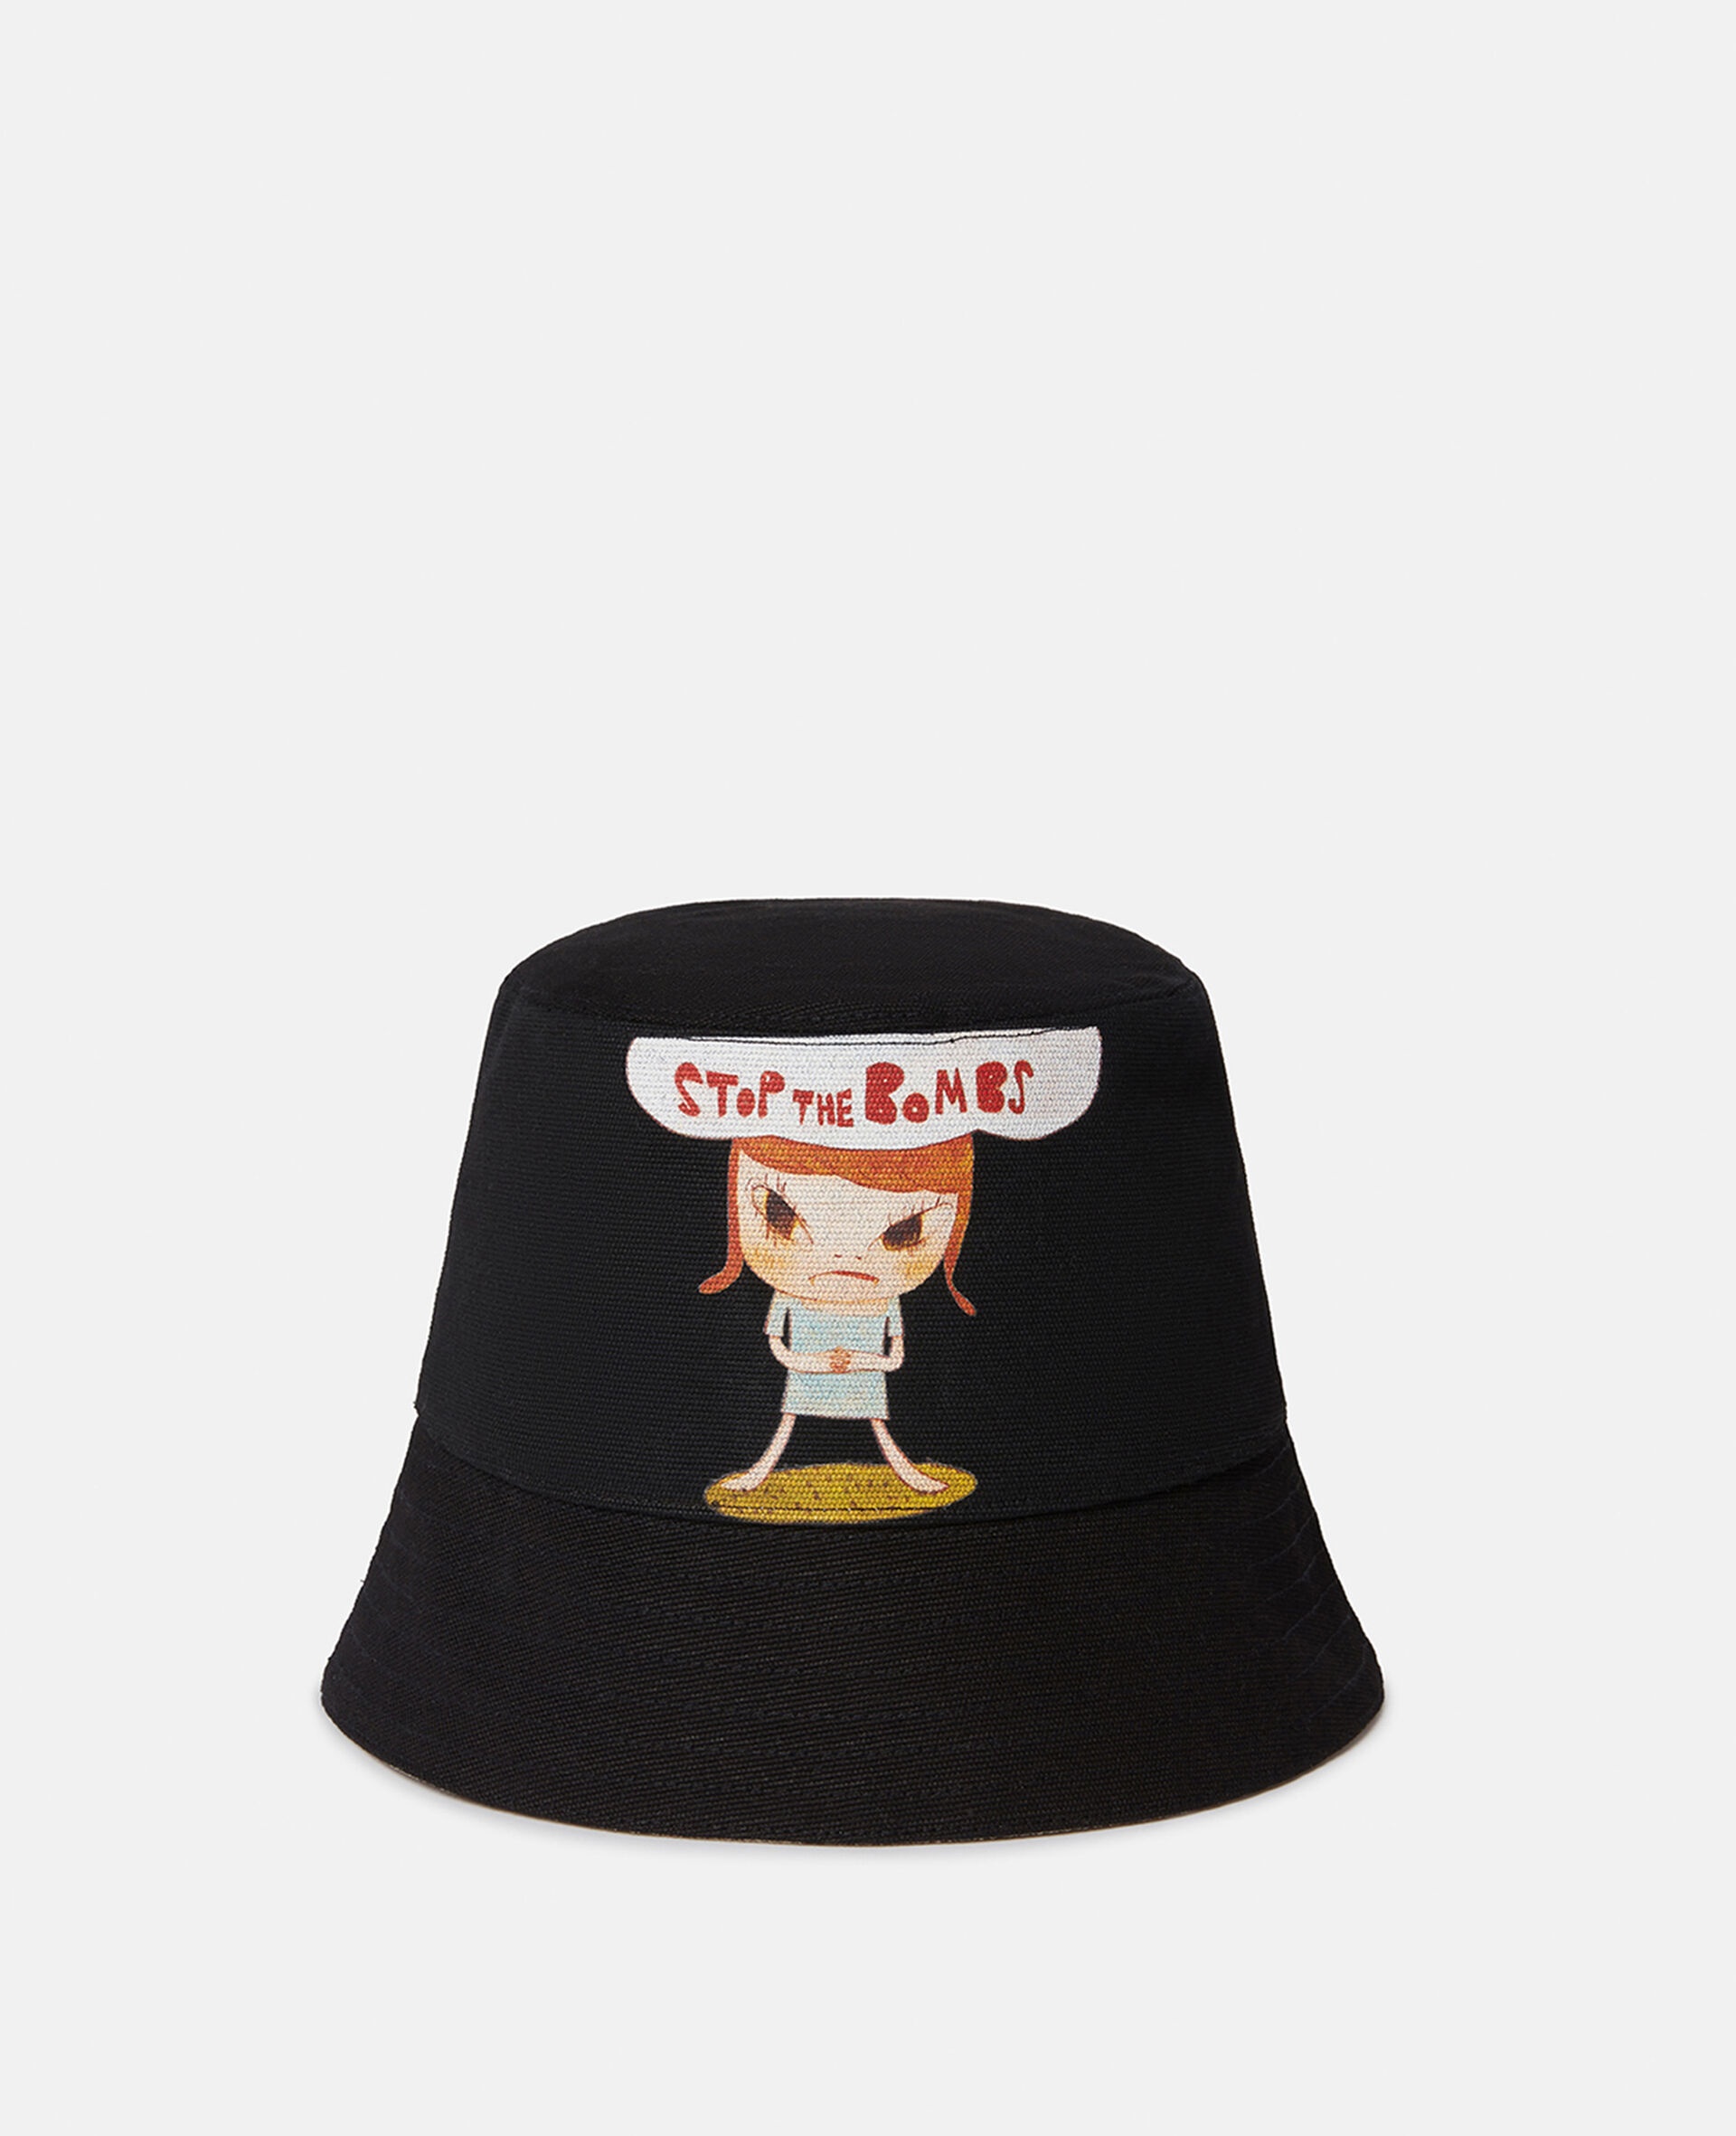 Sinister Child Print Bucket Hat - 1